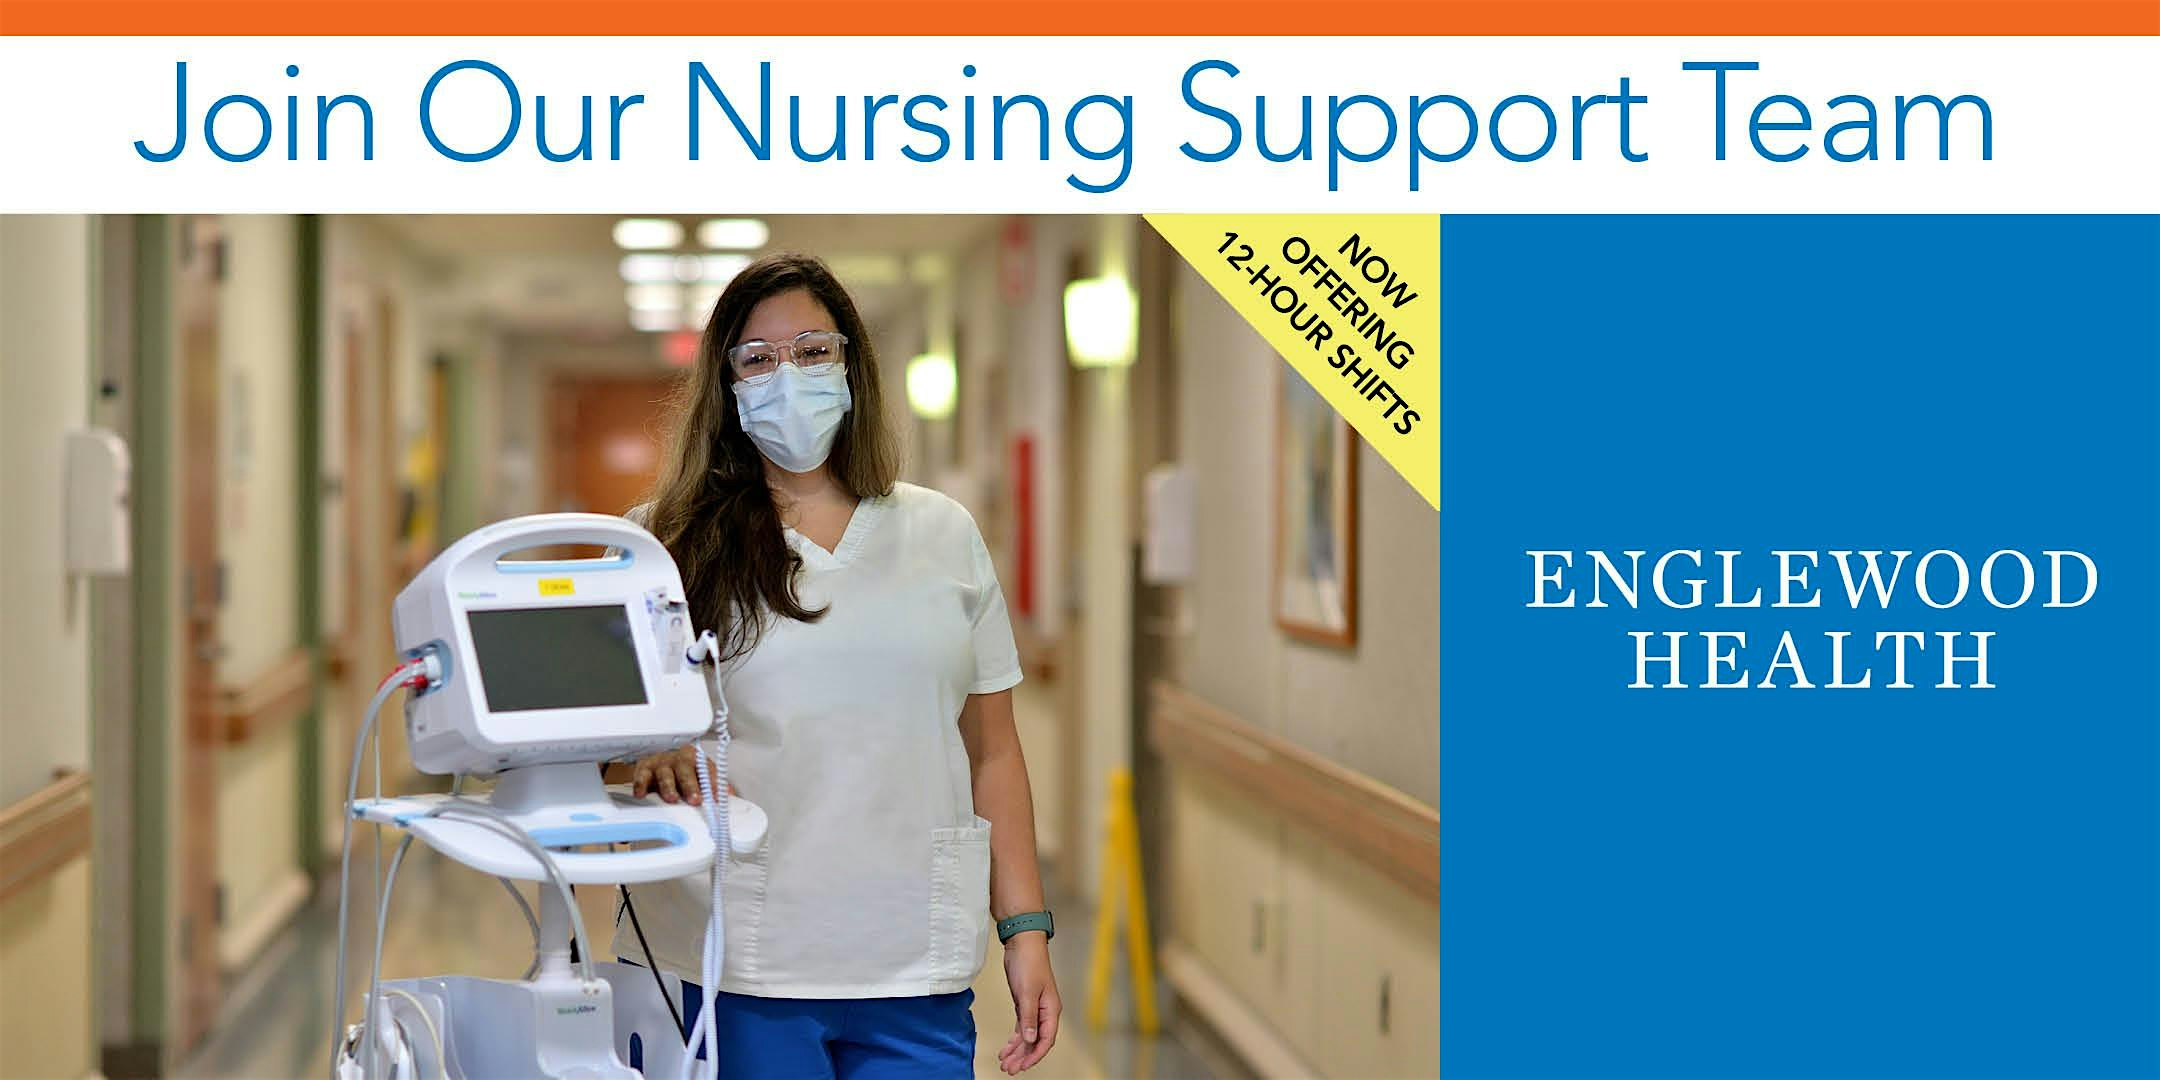 More info: Nursing Support Hiring Event